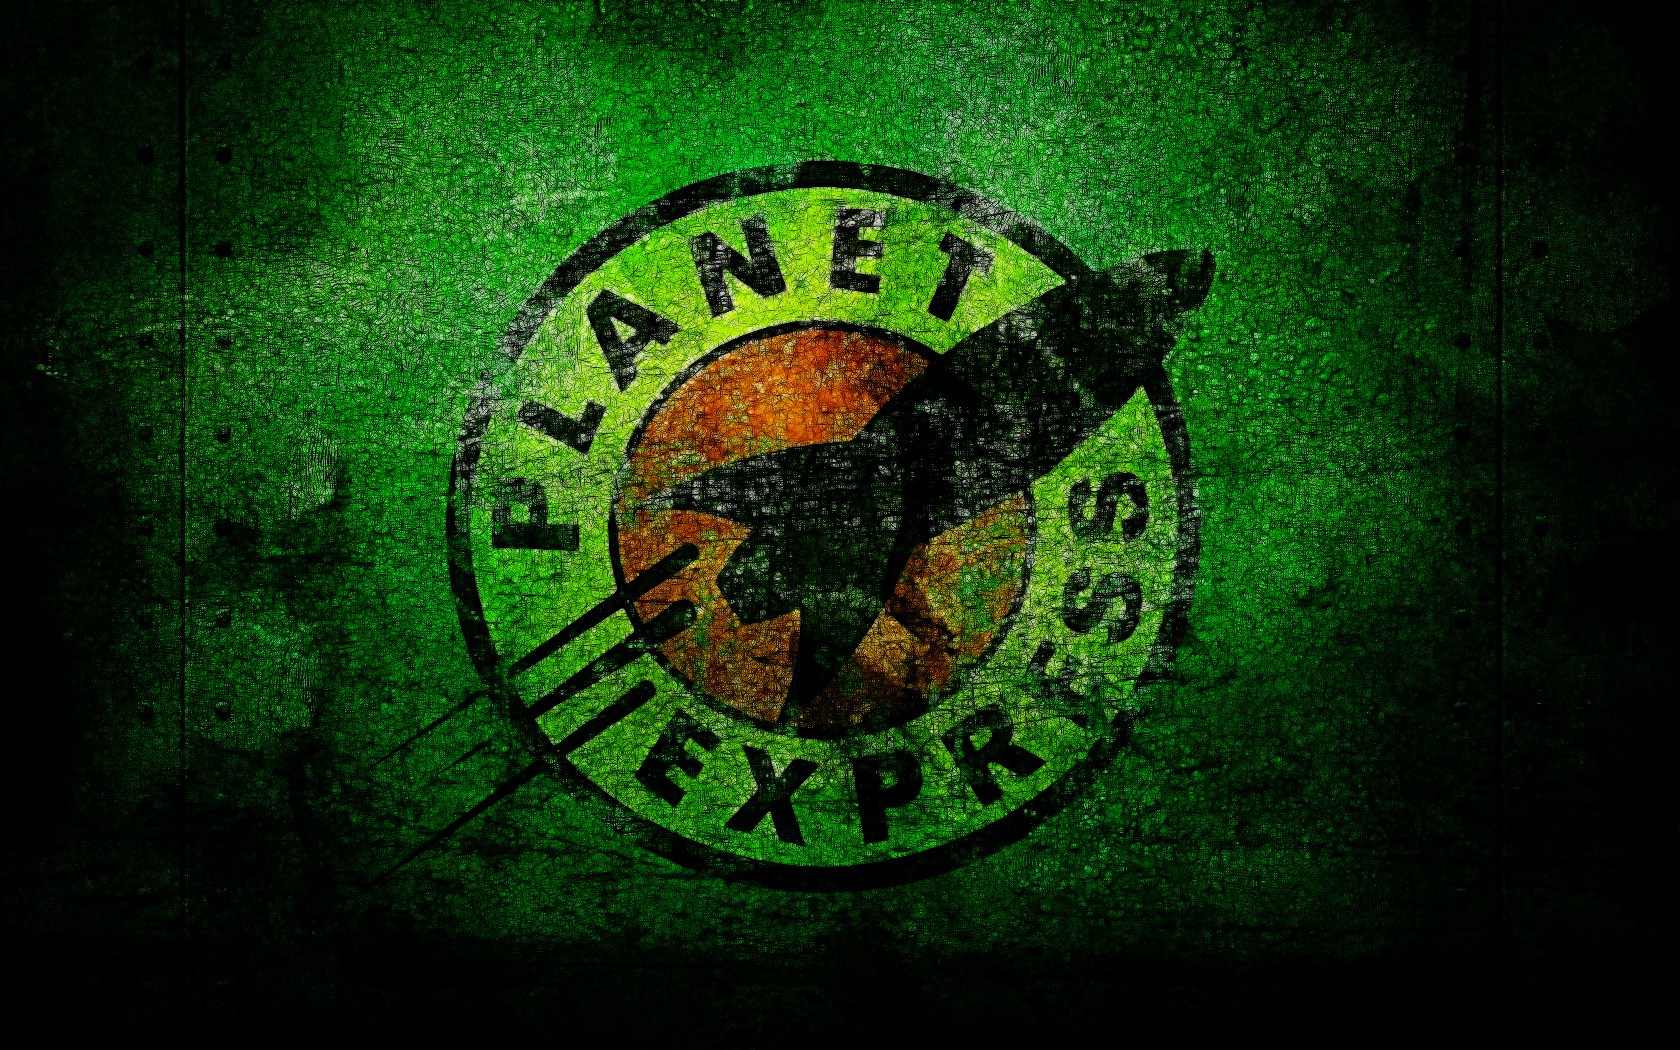 General 1680x1050 science fiction planet express cartoon TV series Futurama